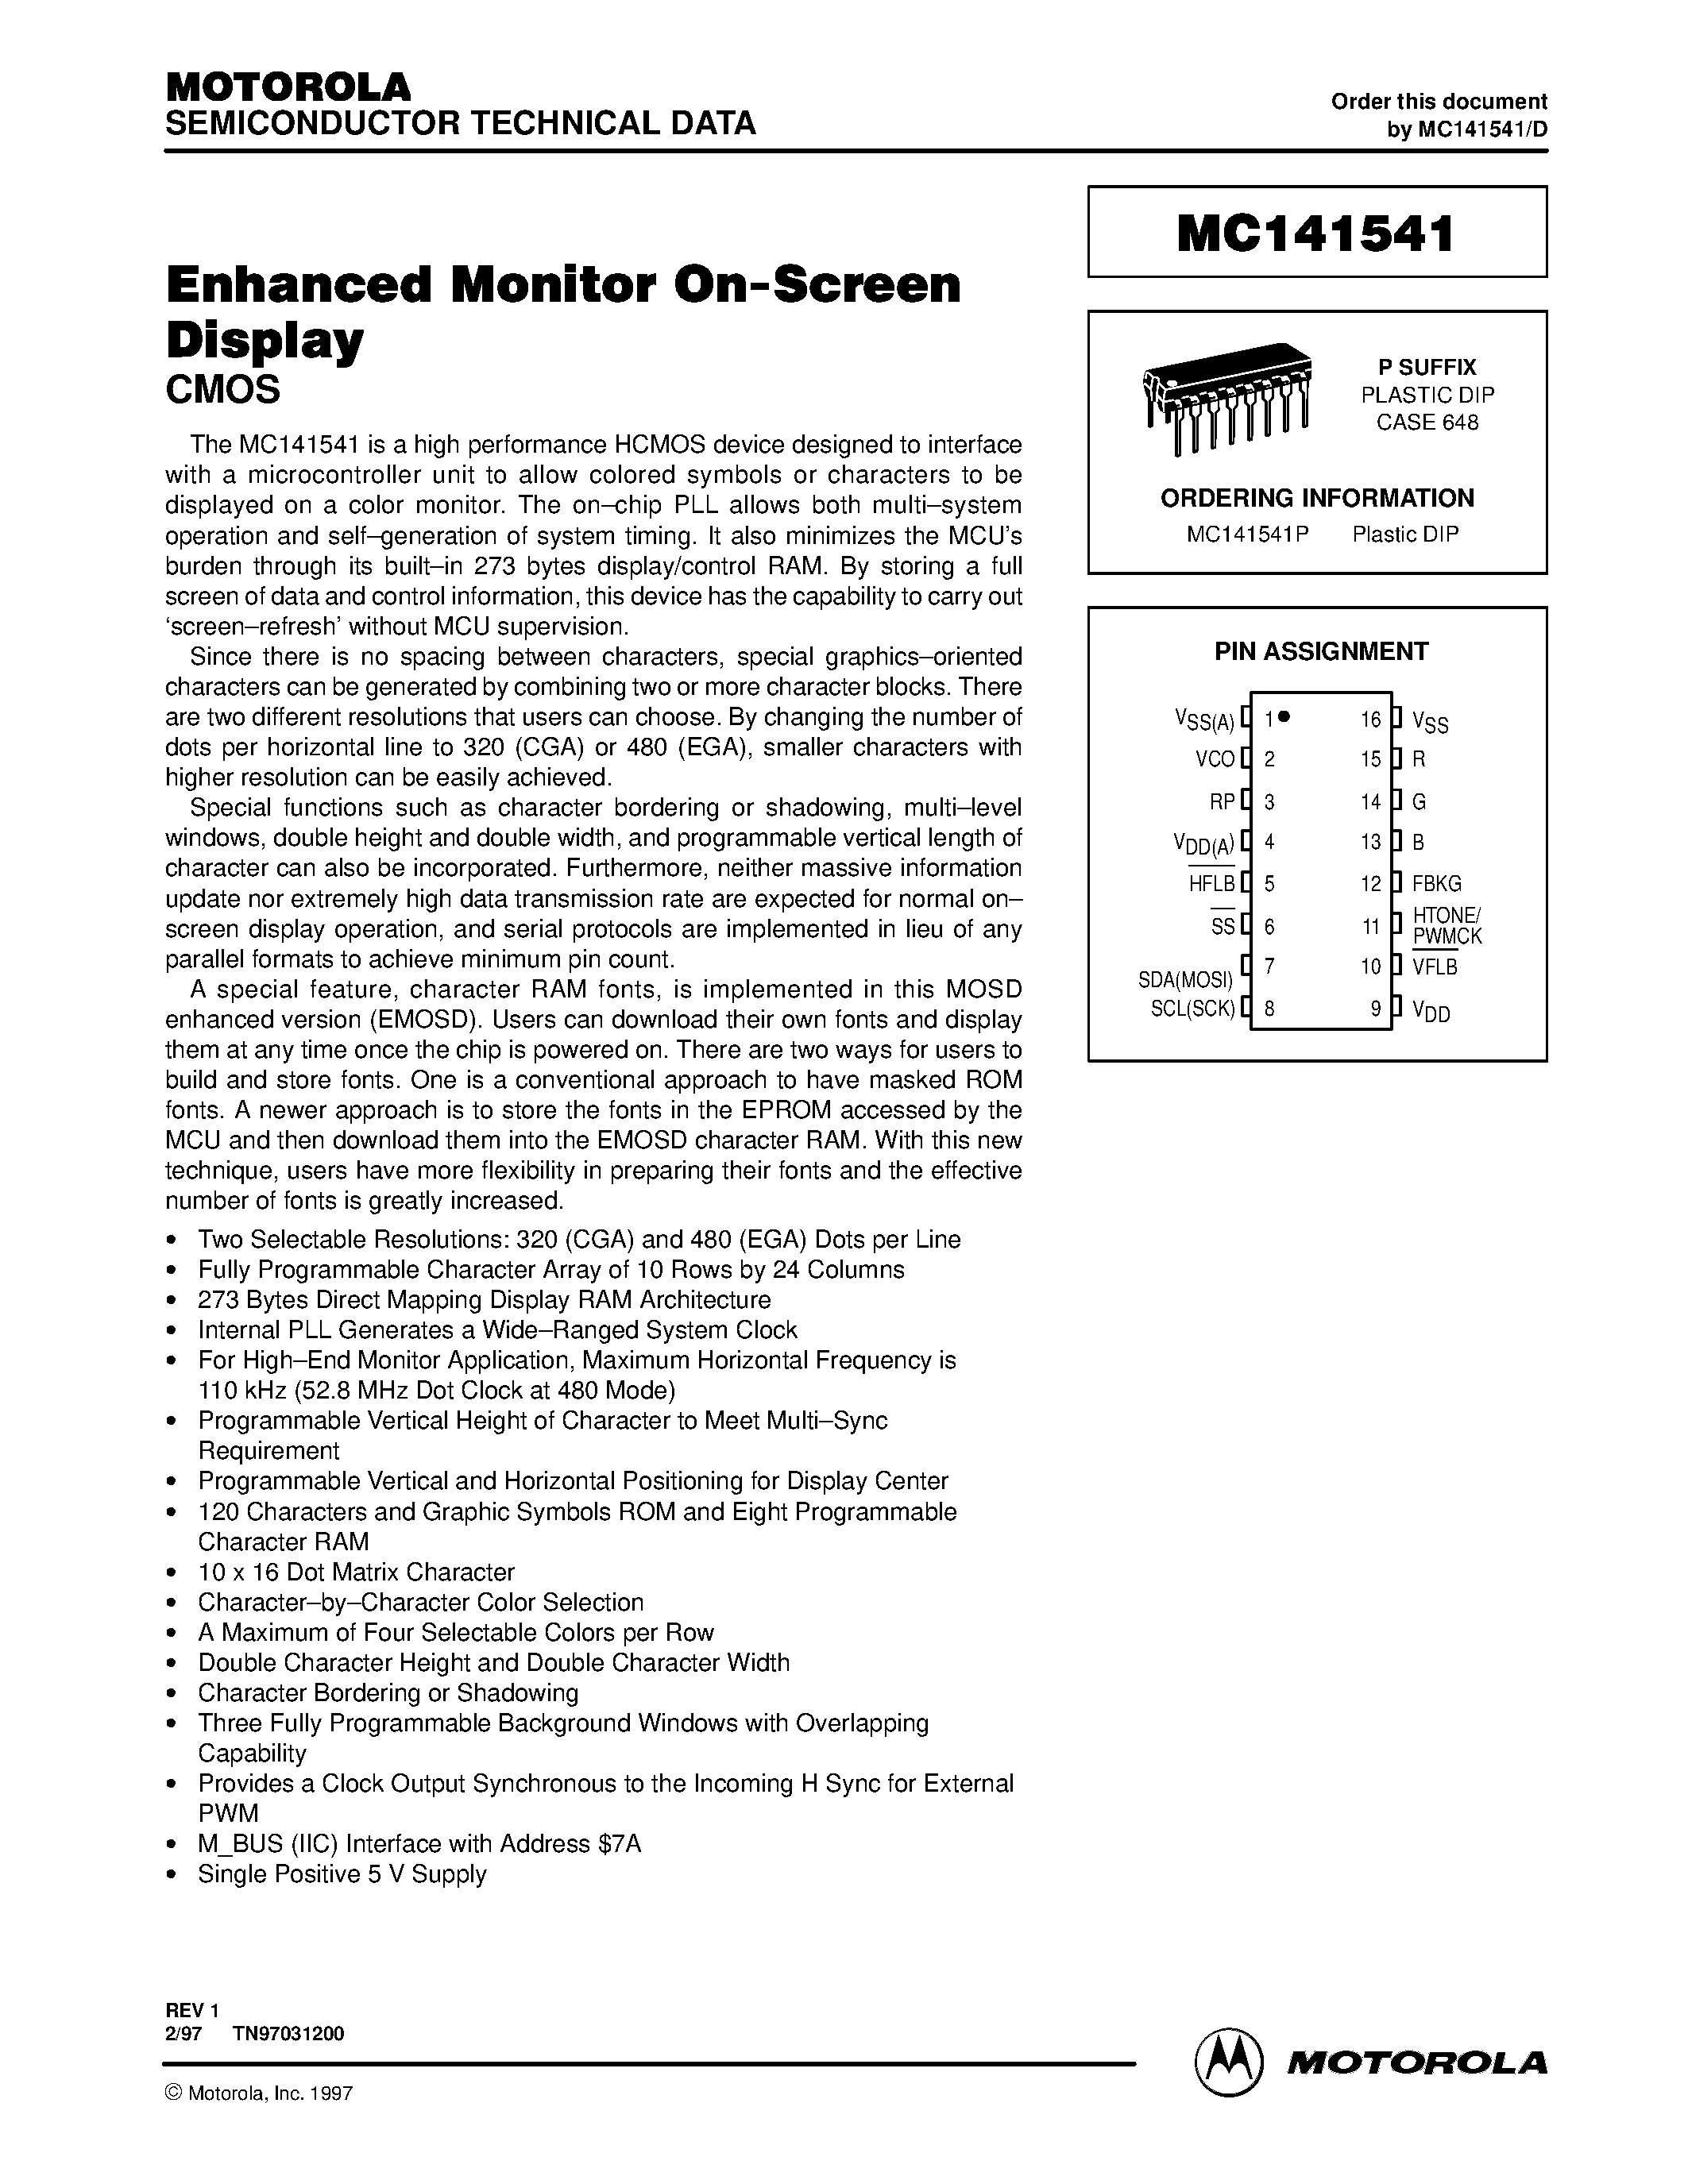 Datasheet MC141541P - Enhanced Monitor On-Screen Display page 1